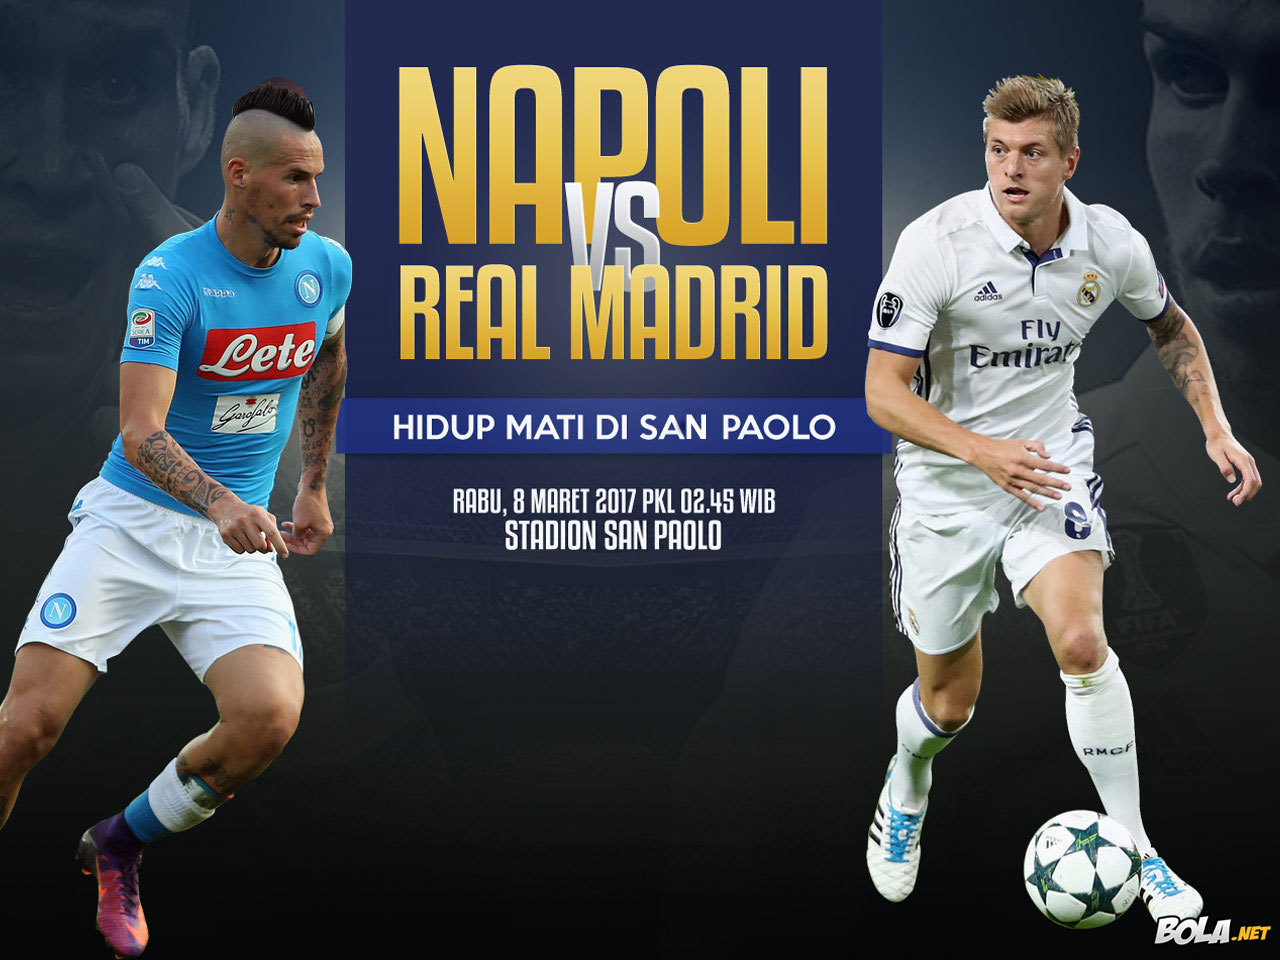 Deskripsi : Wallpaper Napoli Vs Real Madrid, size: 1280x960